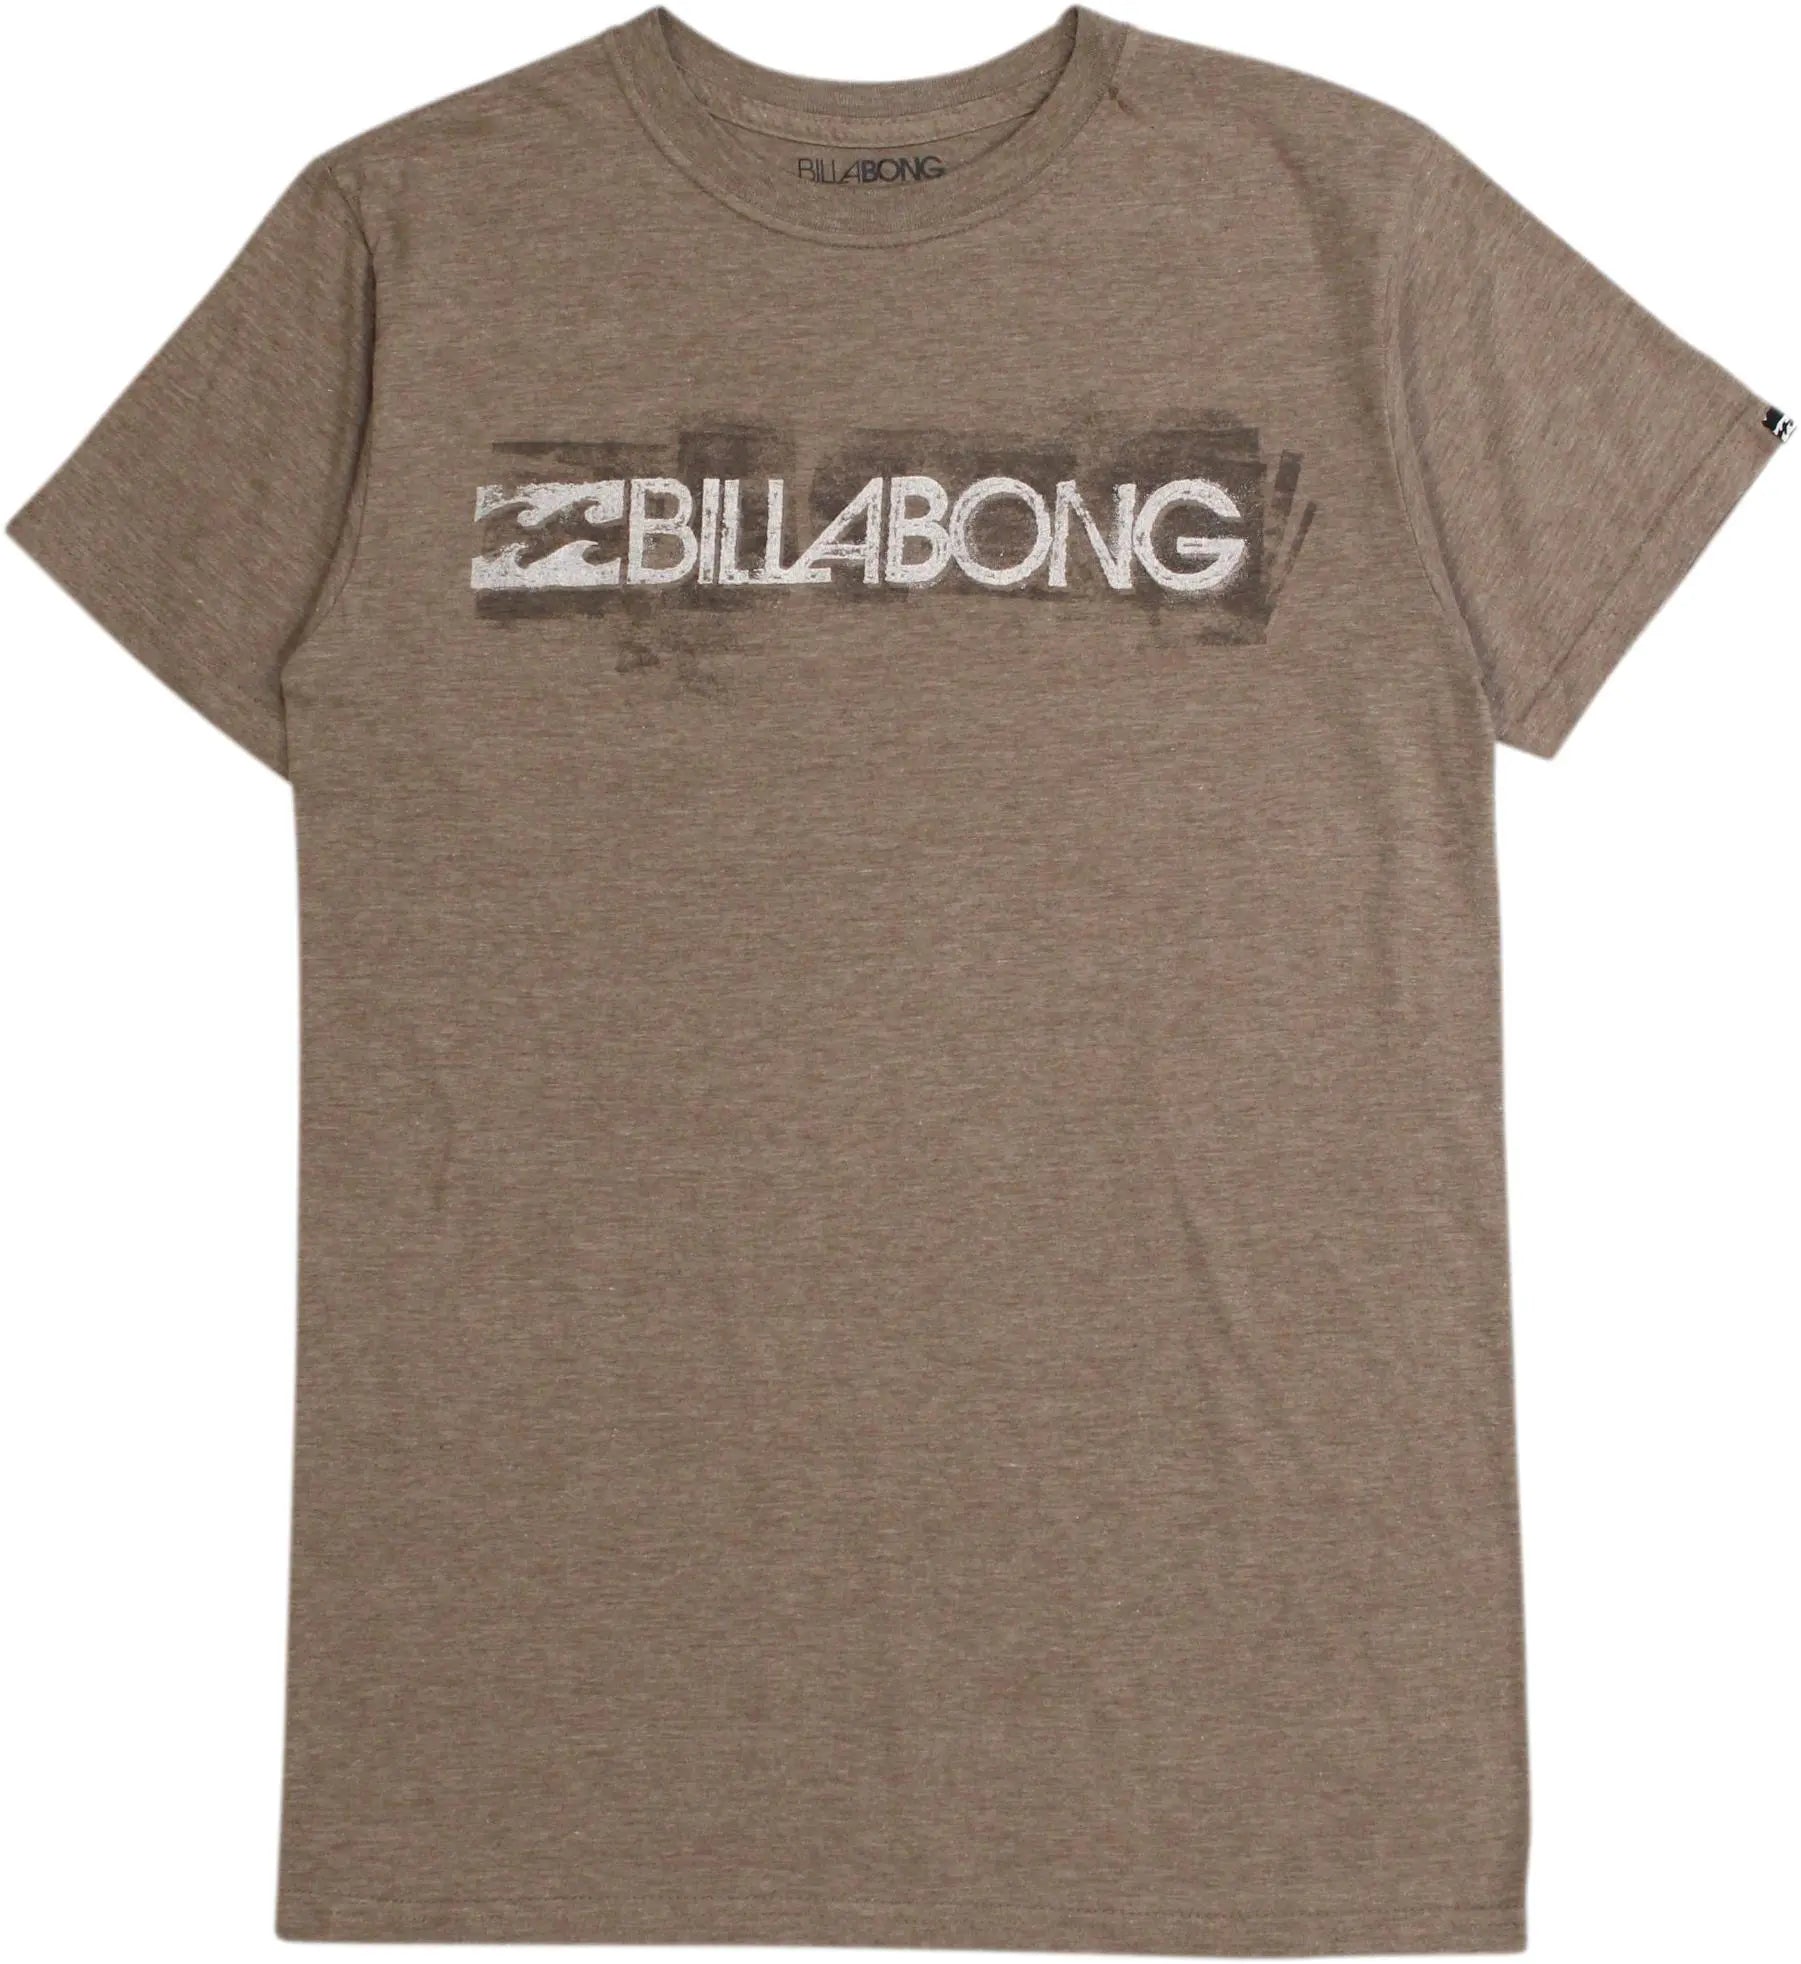 Billabong - Billabong T-Shirt- ThriftTale.com - Vintage and second handclothing